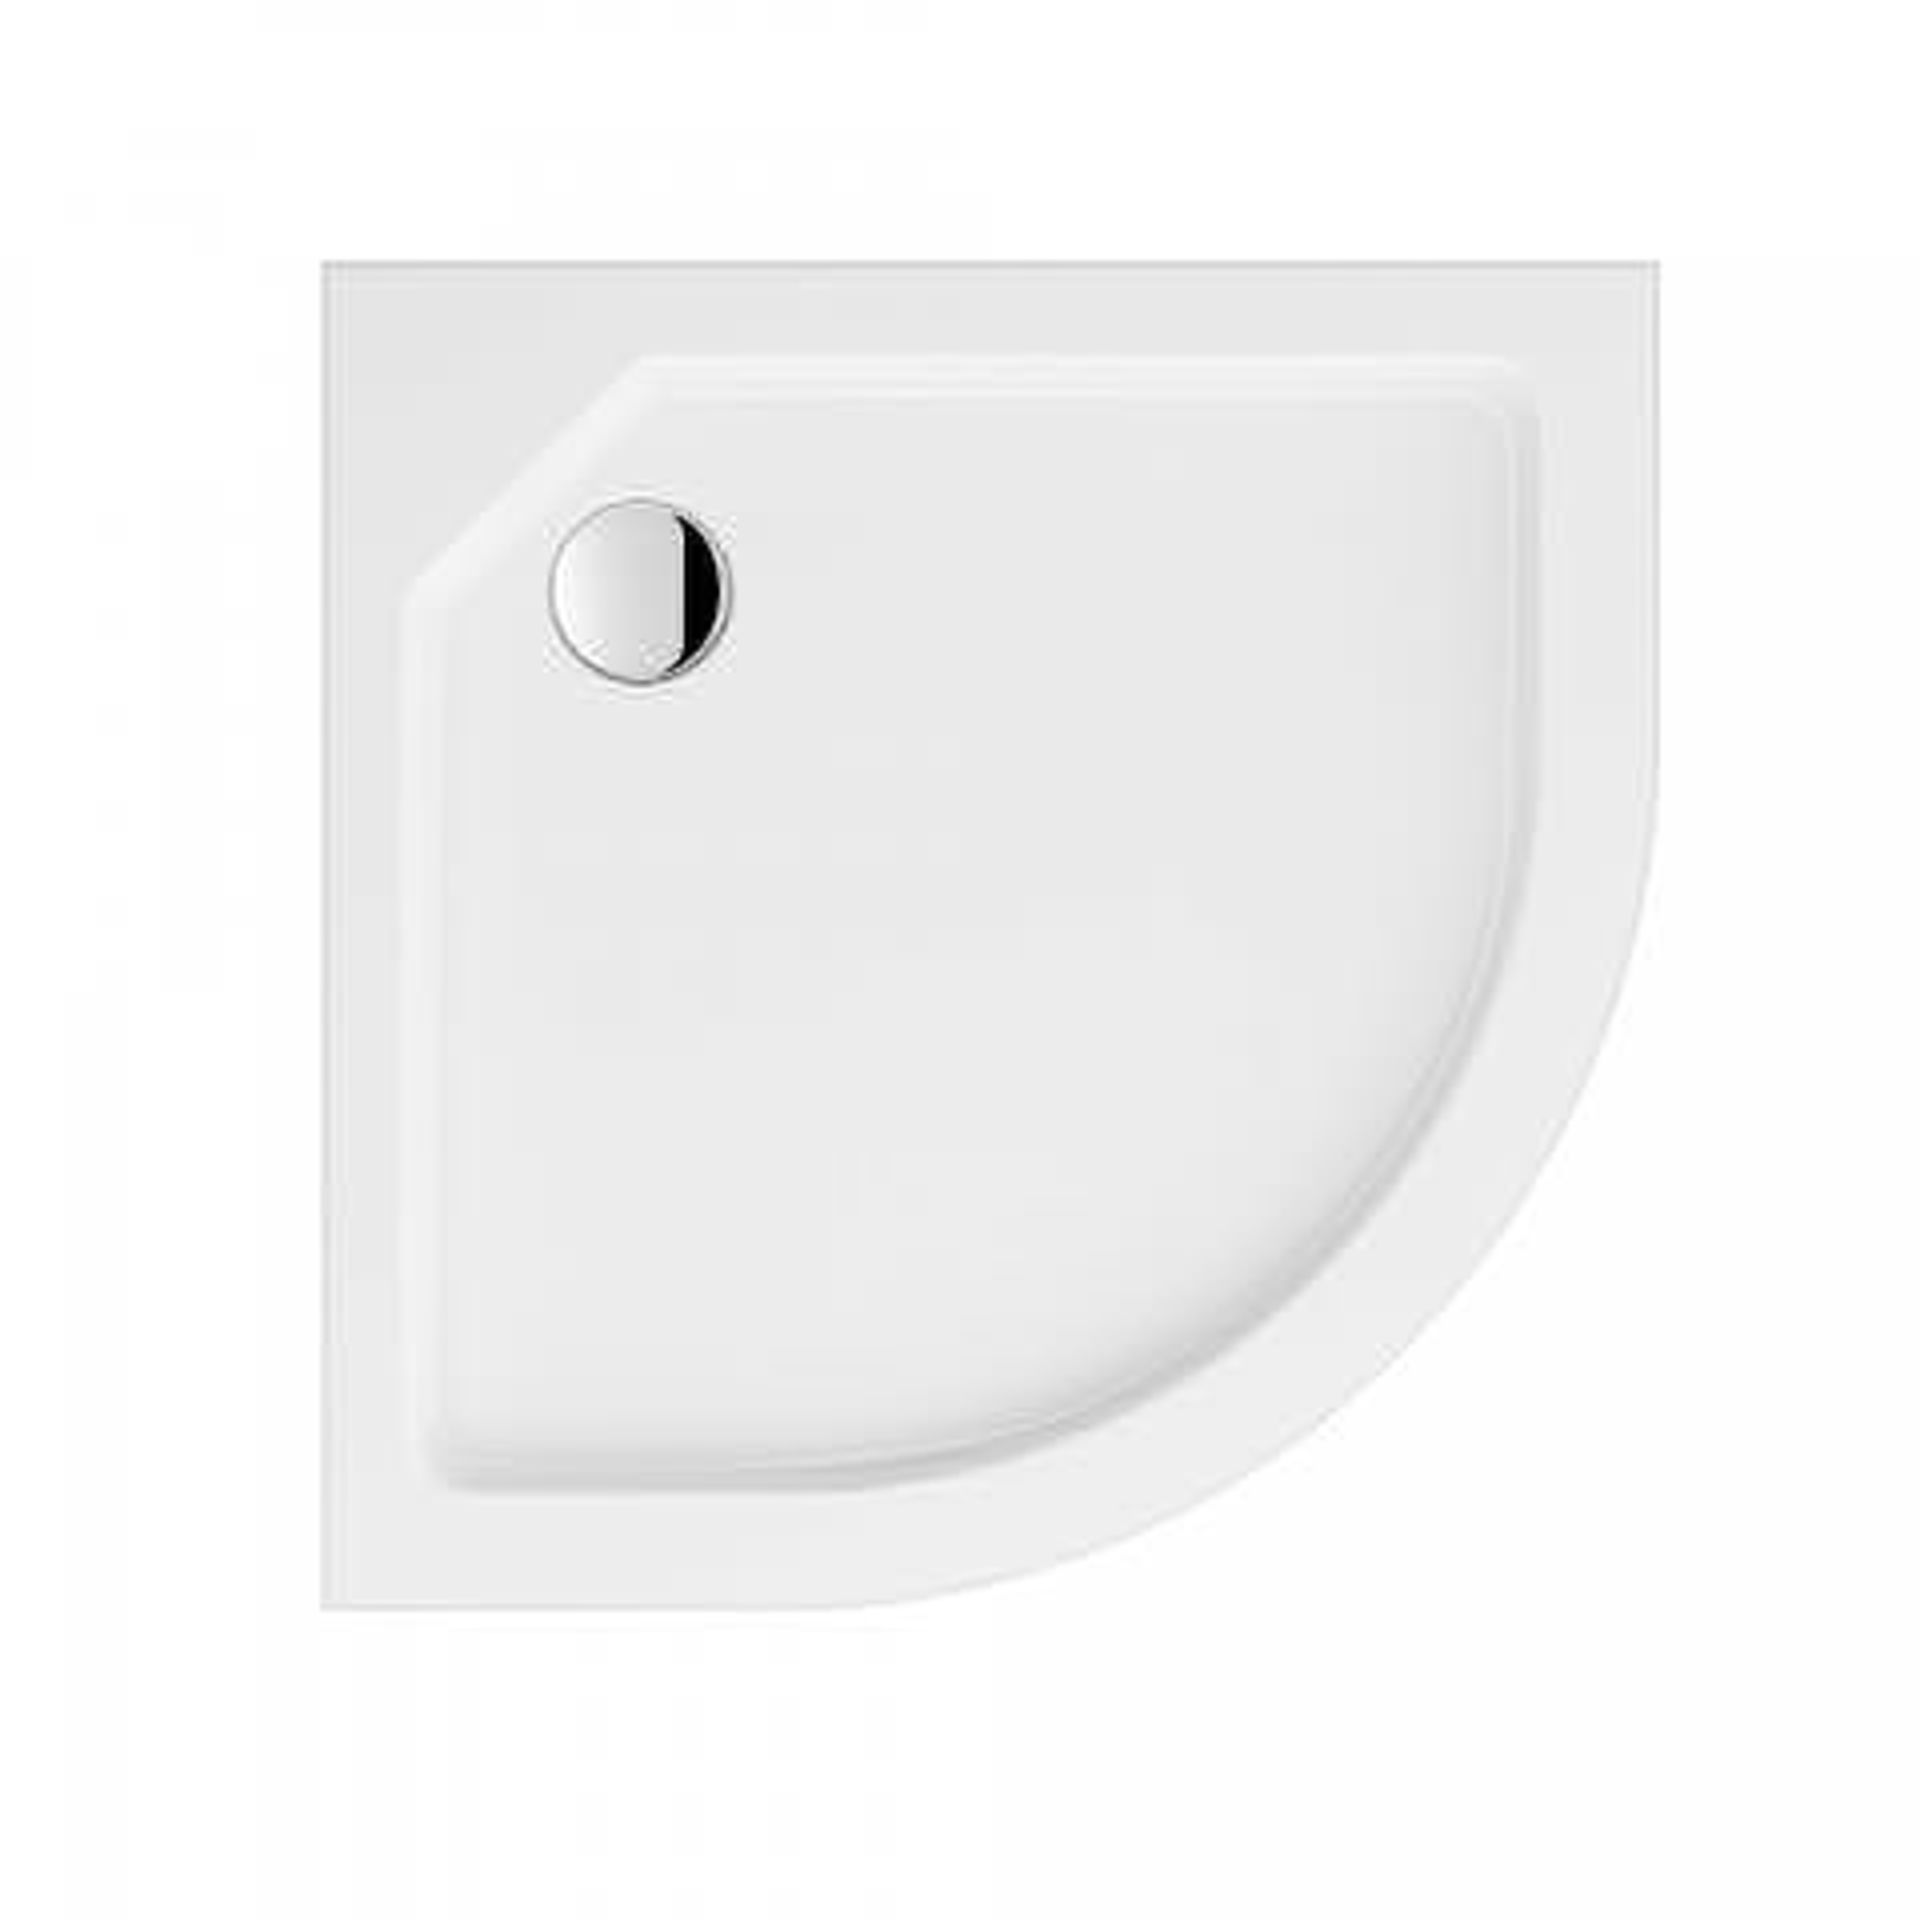 (N40) 900x900mm Quadrant Easy Plumb Shower Tray. RRP £119.99. Our brilliant white ultra slim trays - Bild 2 aus 2